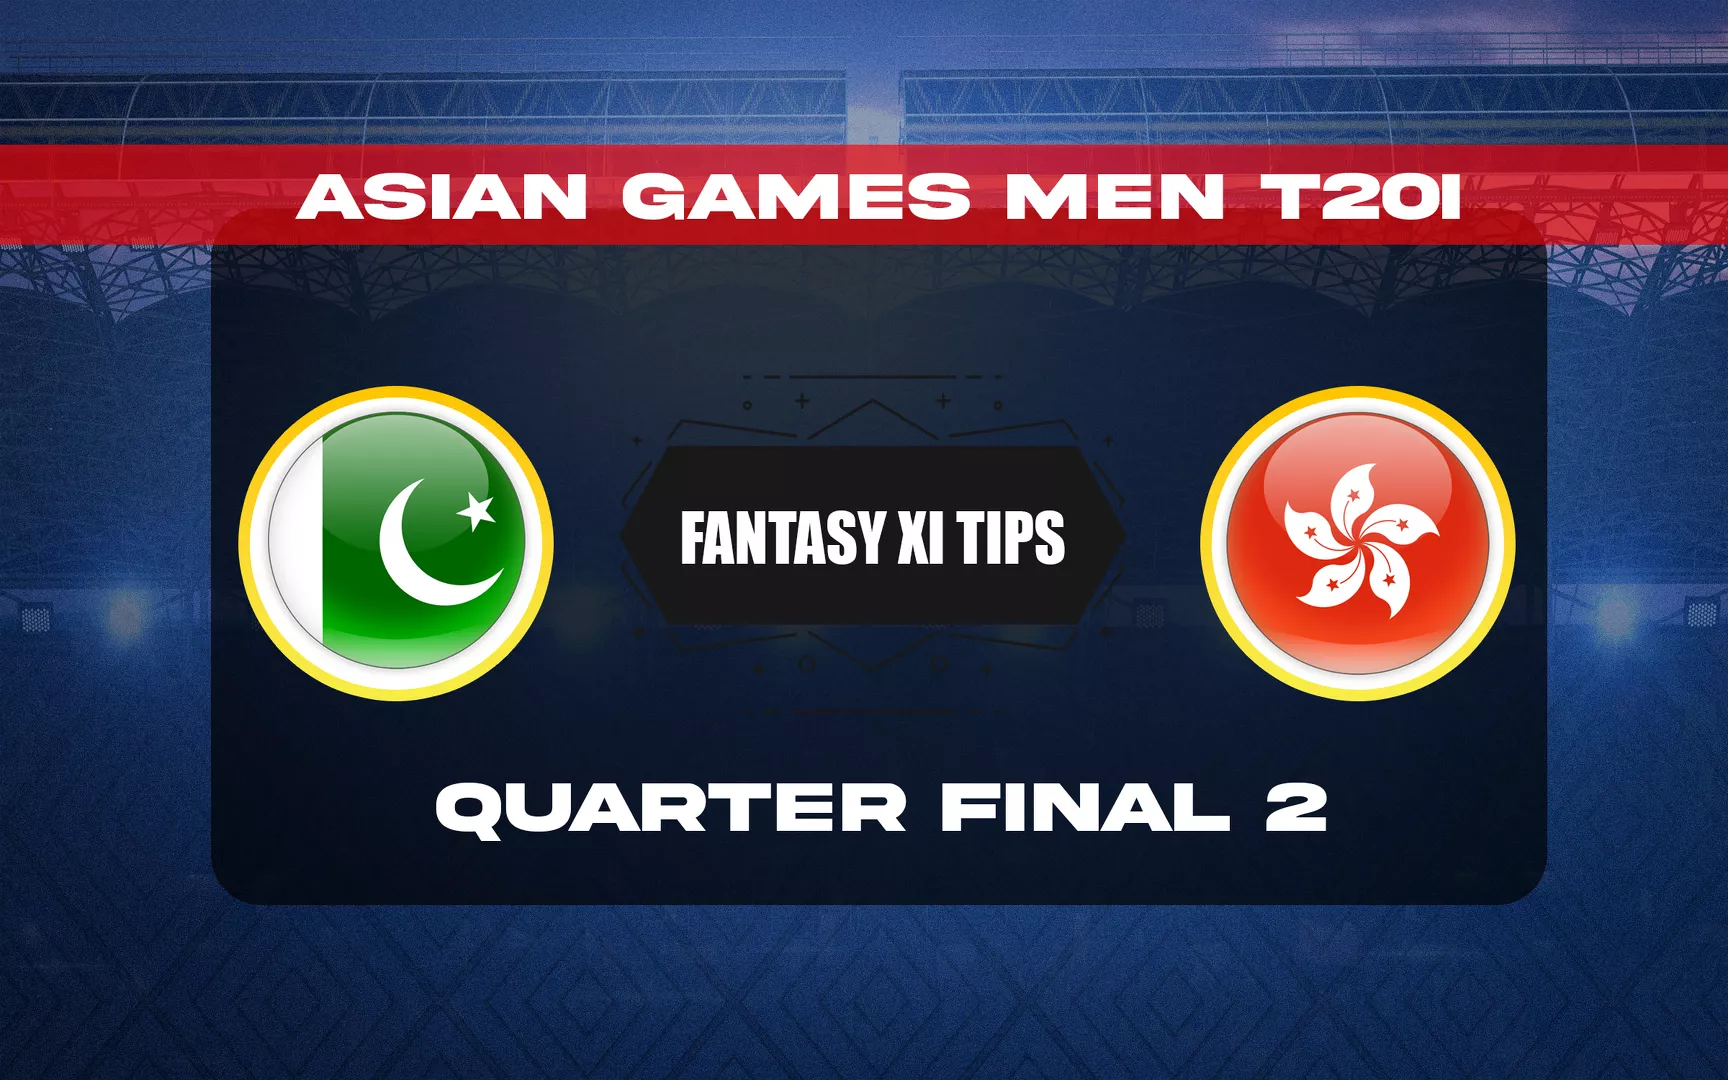 PAK vs HK Dream11 Prediction, Dream11 Playing XI, Today Quarter Final 2, Asian Games Men T20I